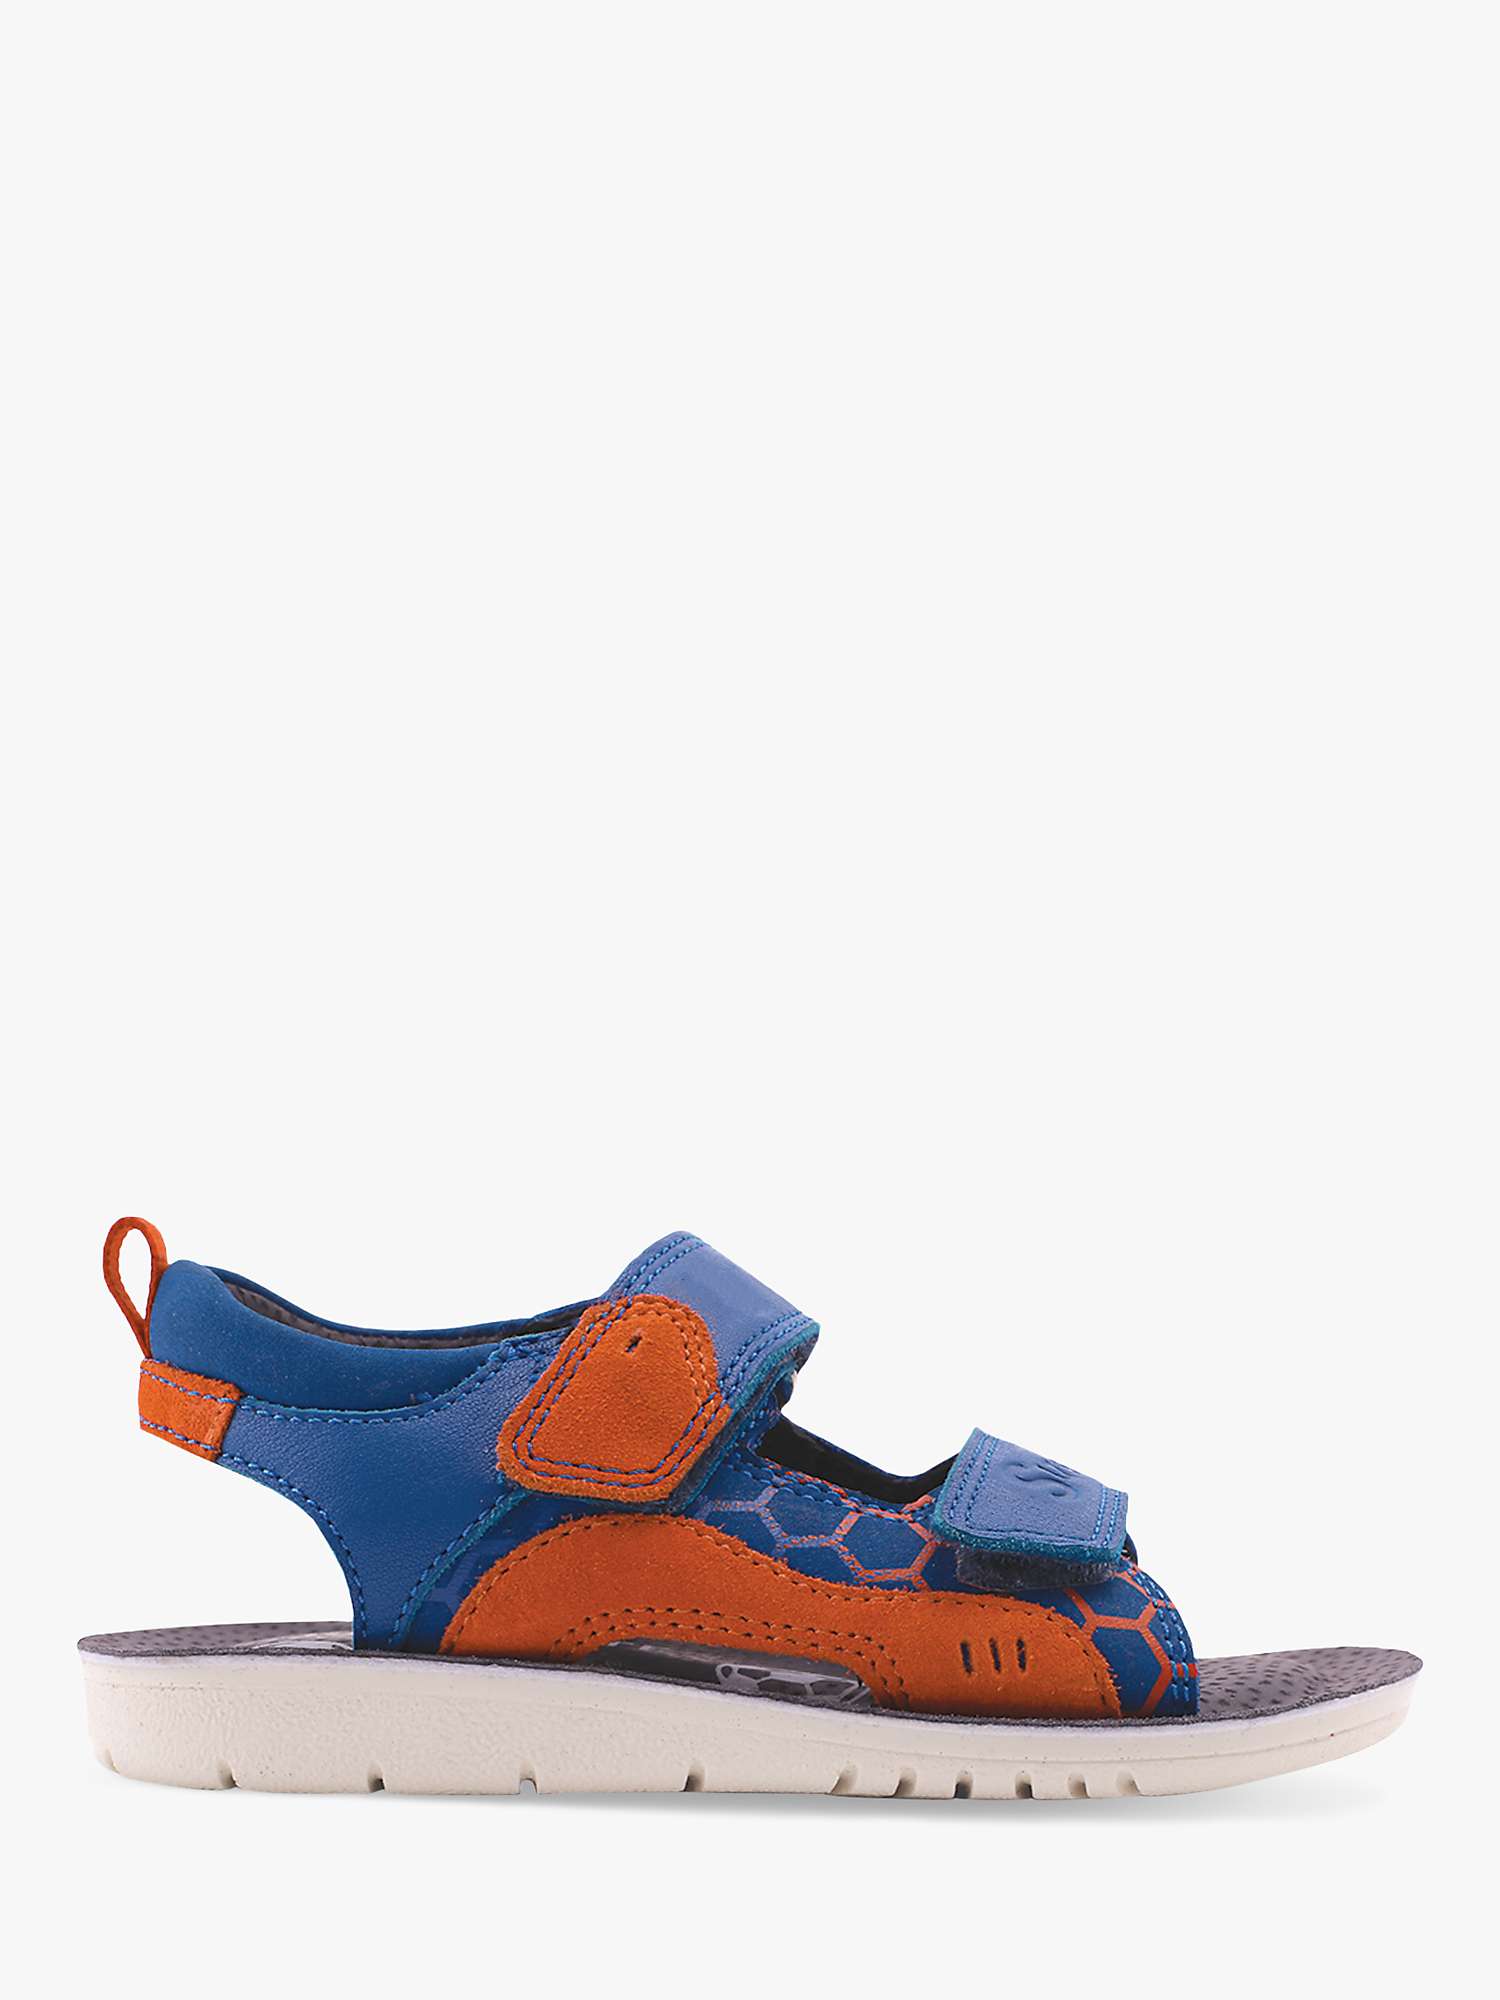 Buy Start-Rite Kids' Beach Ball Leather Sandals, Blue/Orange Online at johnlewis.com